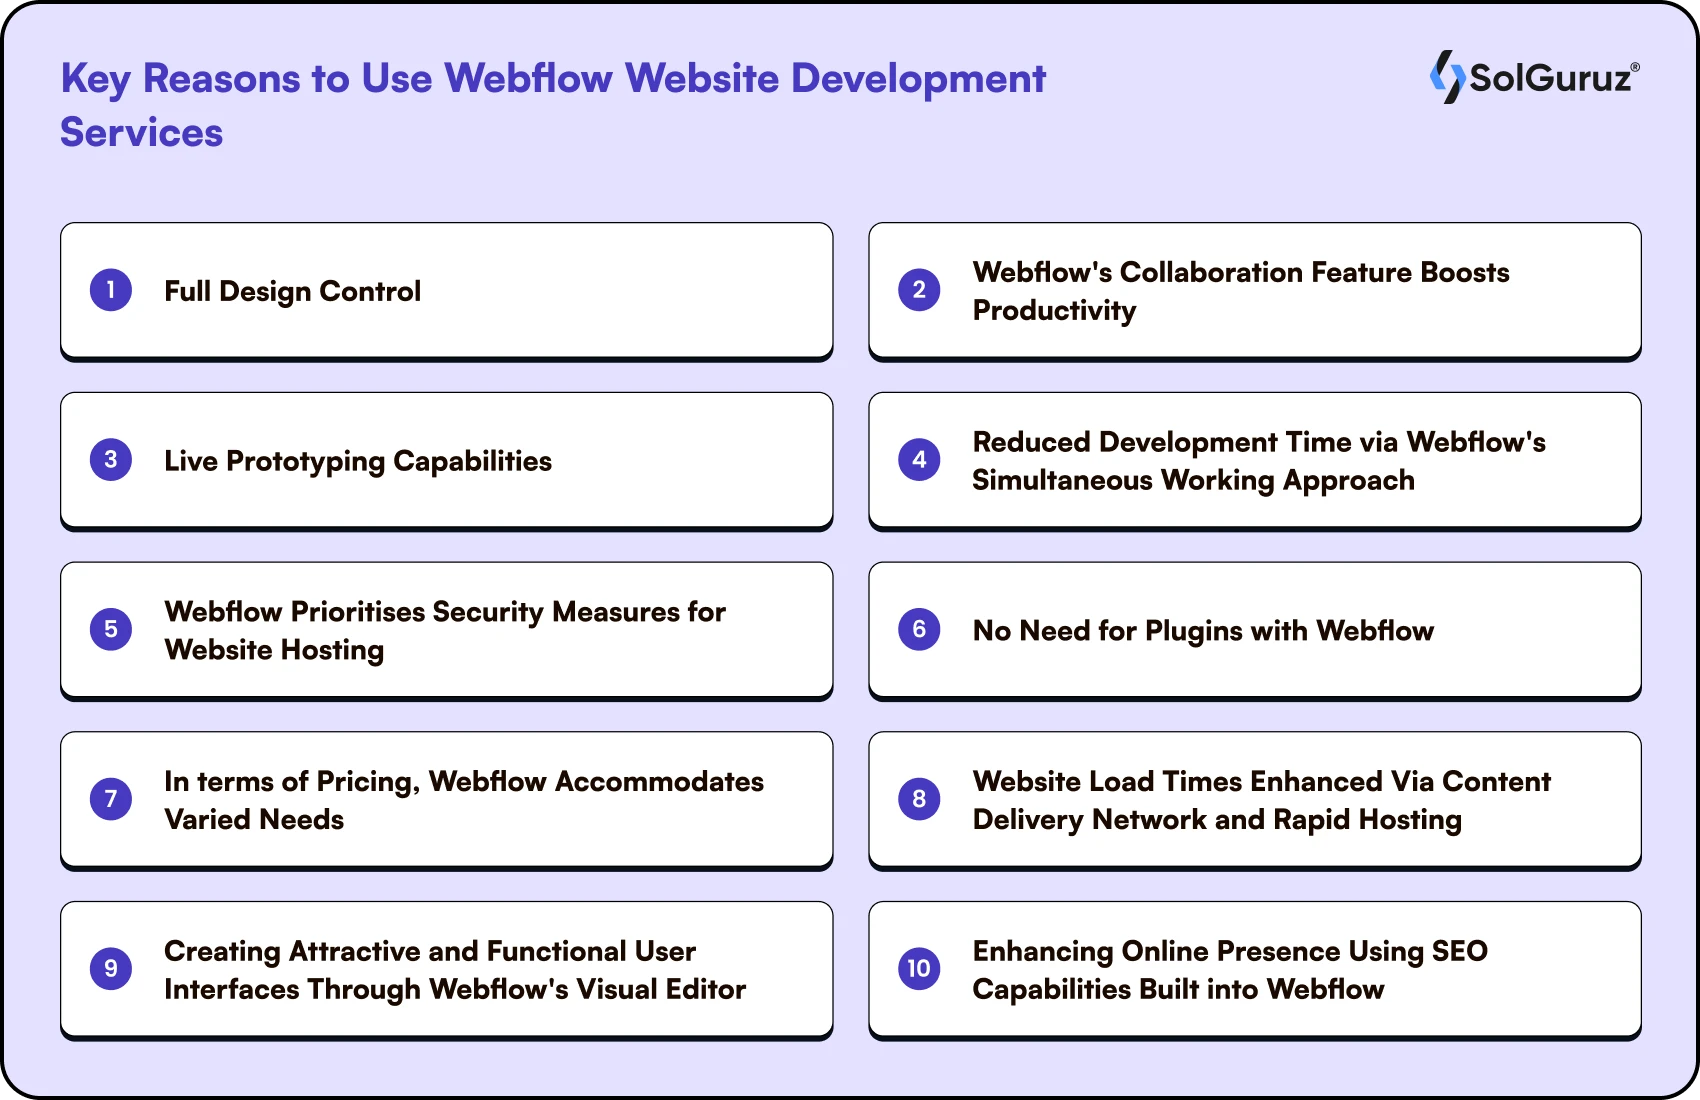 Key Reasons to Use Webflow Website Development Services